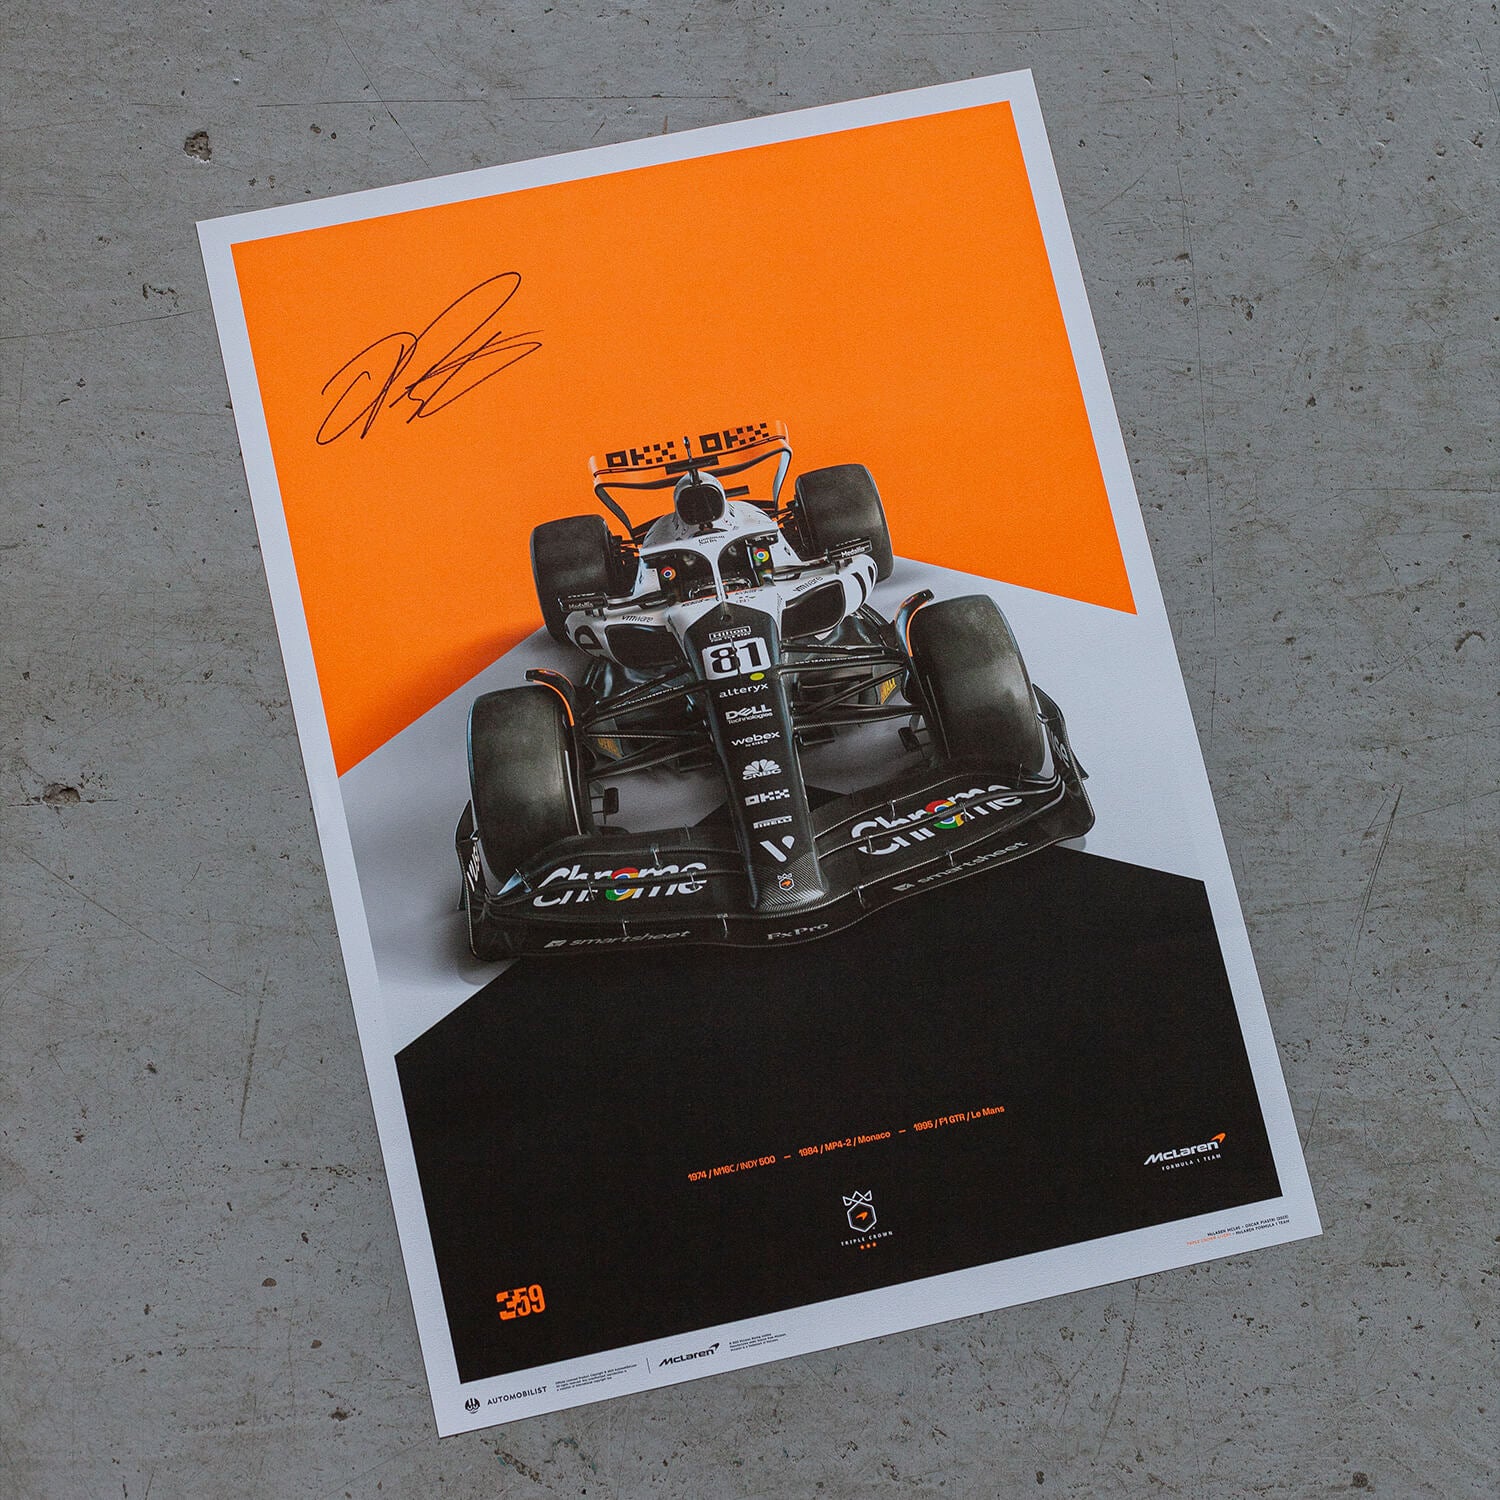 Signed by Oscar Piastri - McLaren Formula 1 Team - Oscar Piastri - The Triple Crown Livery - 60th Anniversary - 2023